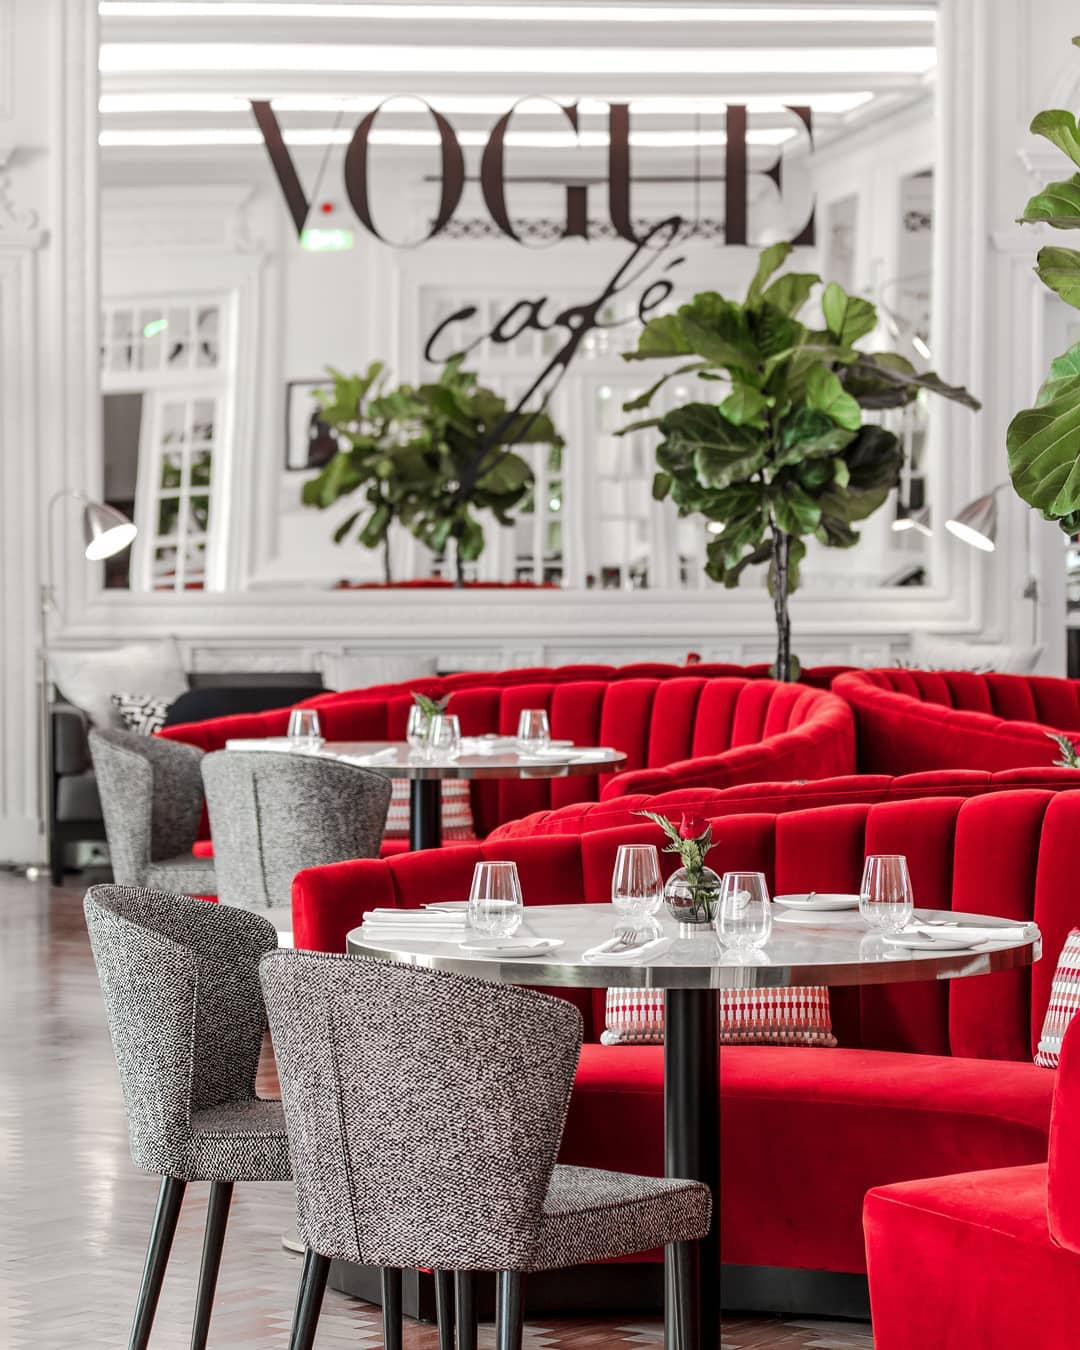 Foto: Vogue Café